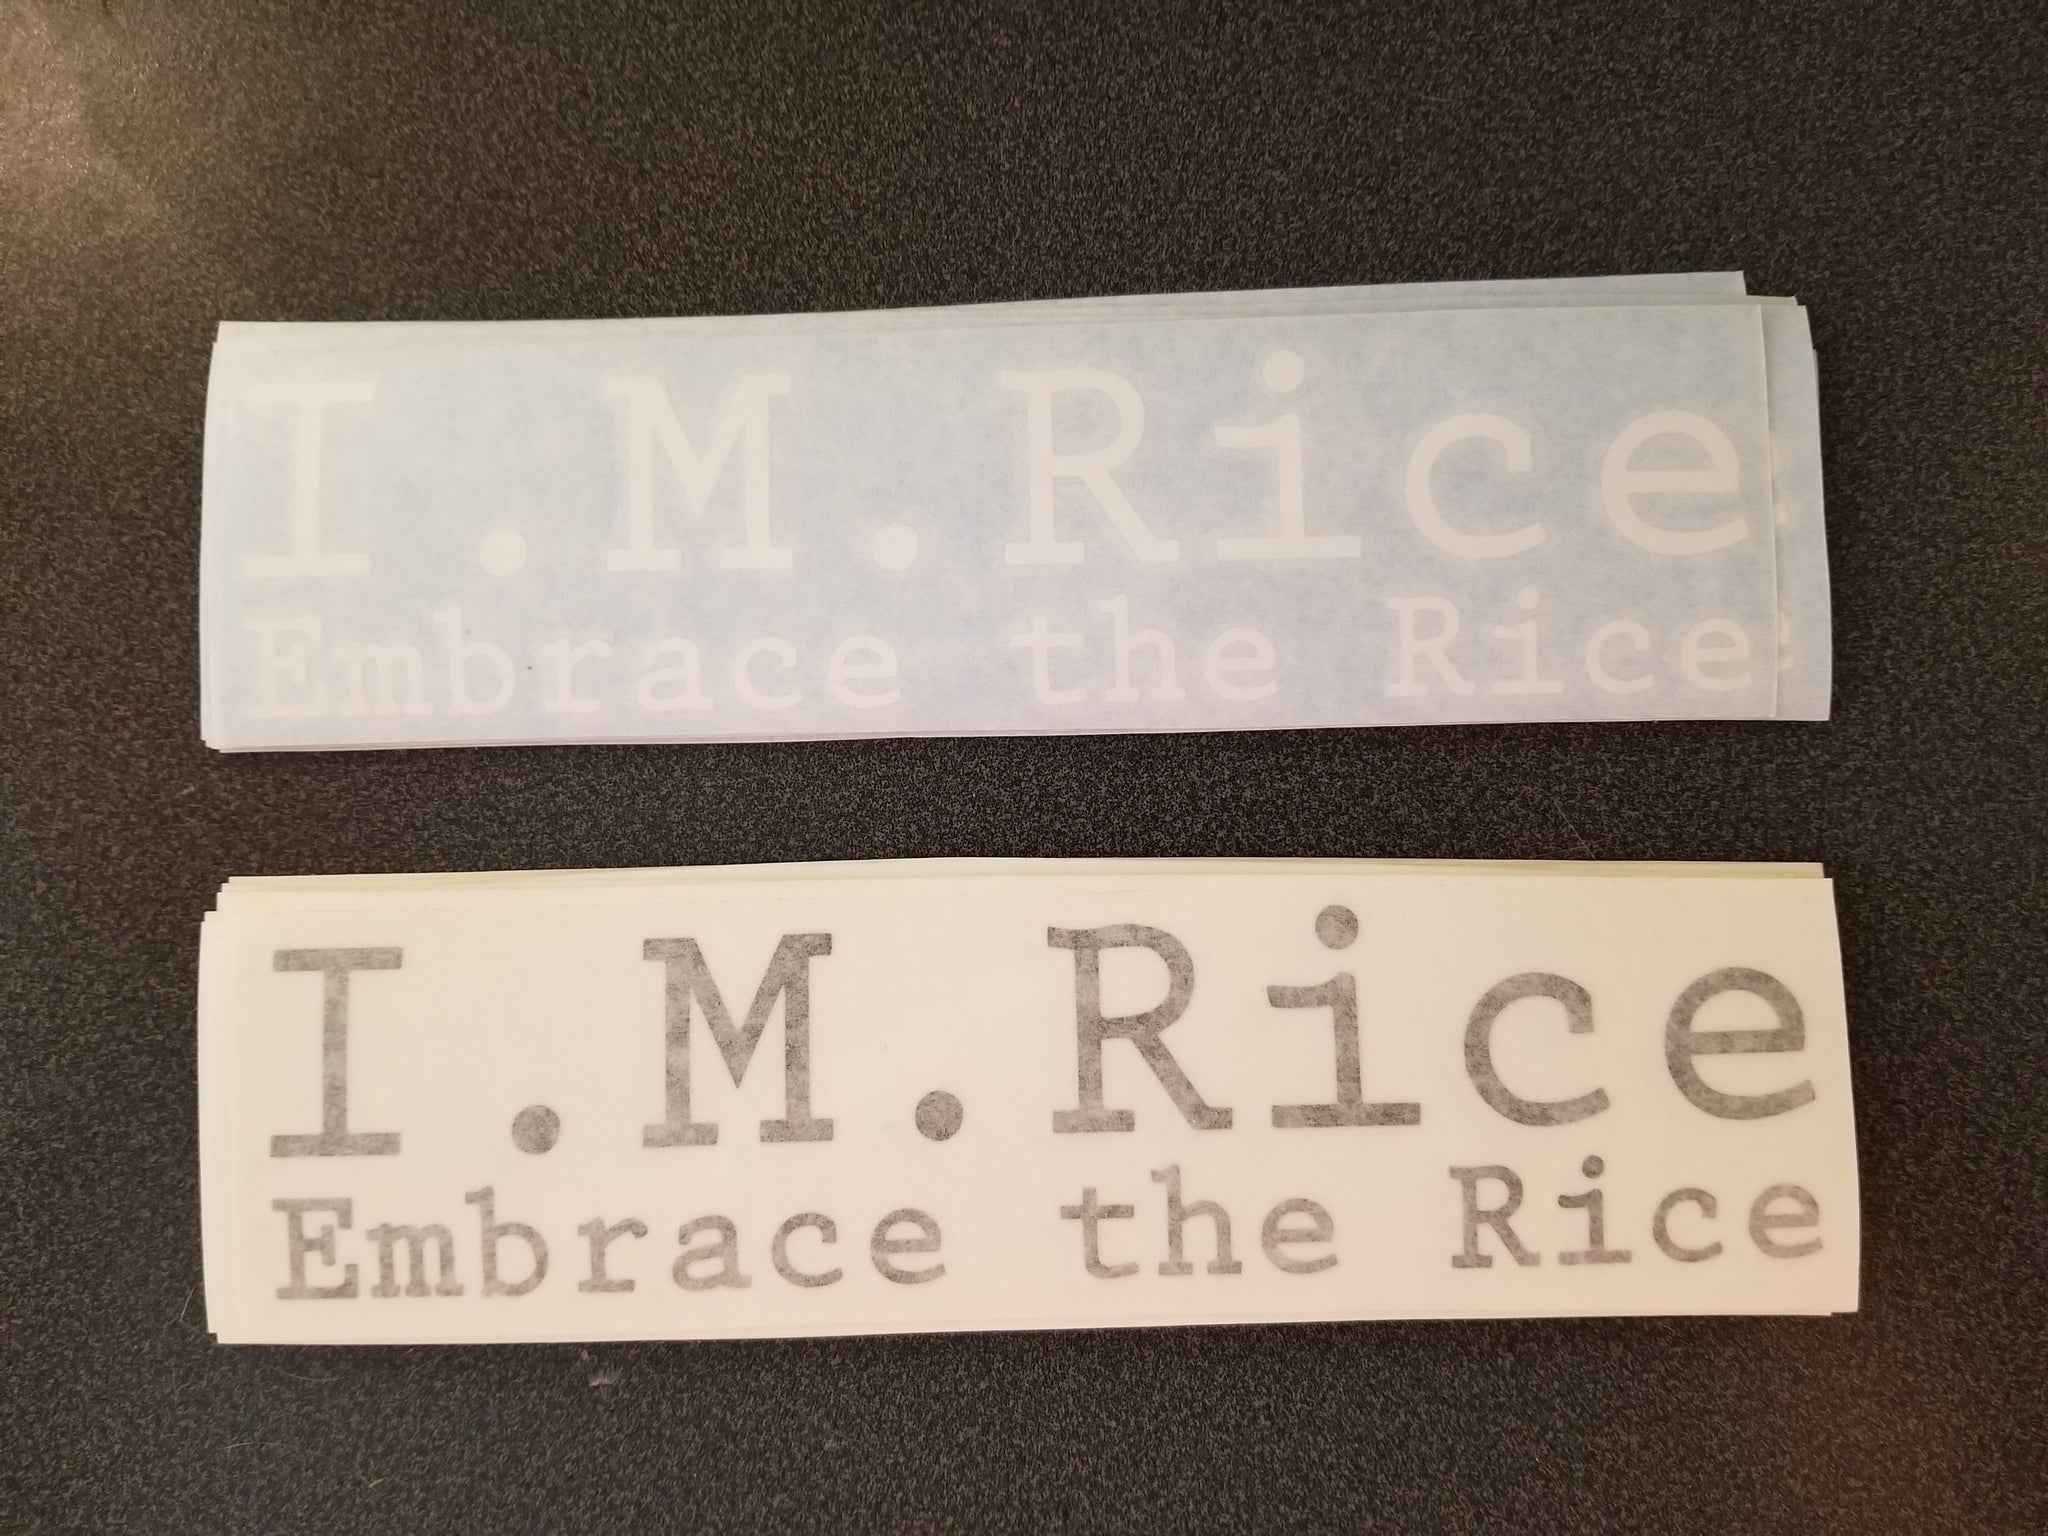 I. M. Rice - Embrace the Rice